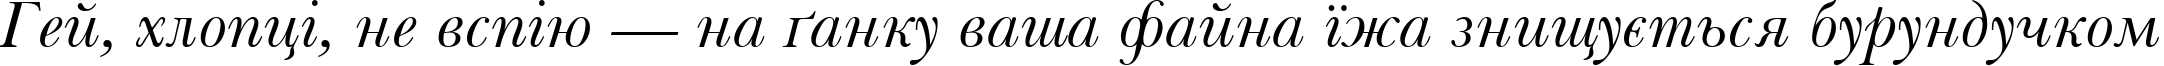 Пример написания шрифтом Baskerville Italic Win95BT текста на украинском